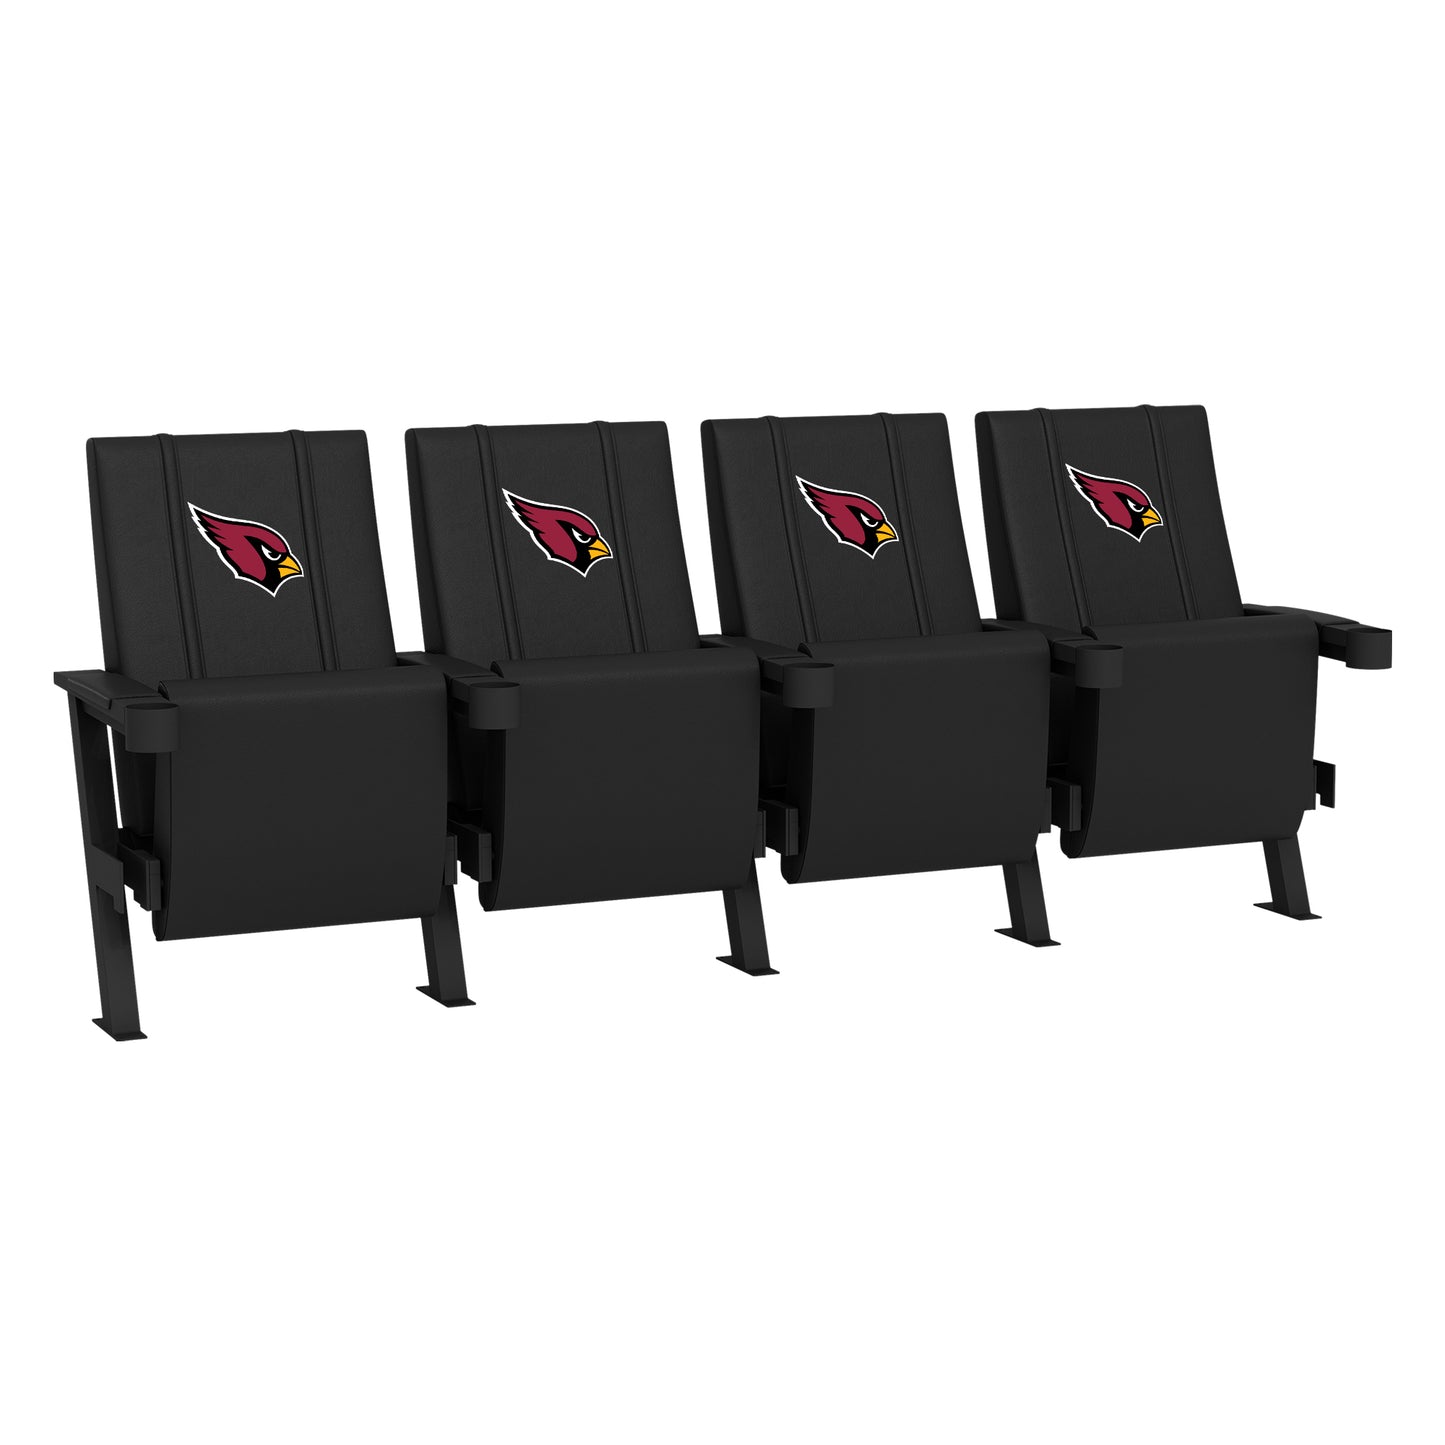 SuiteMax 3.5 VIP Seats with Arizona Cardinals Primary Logo